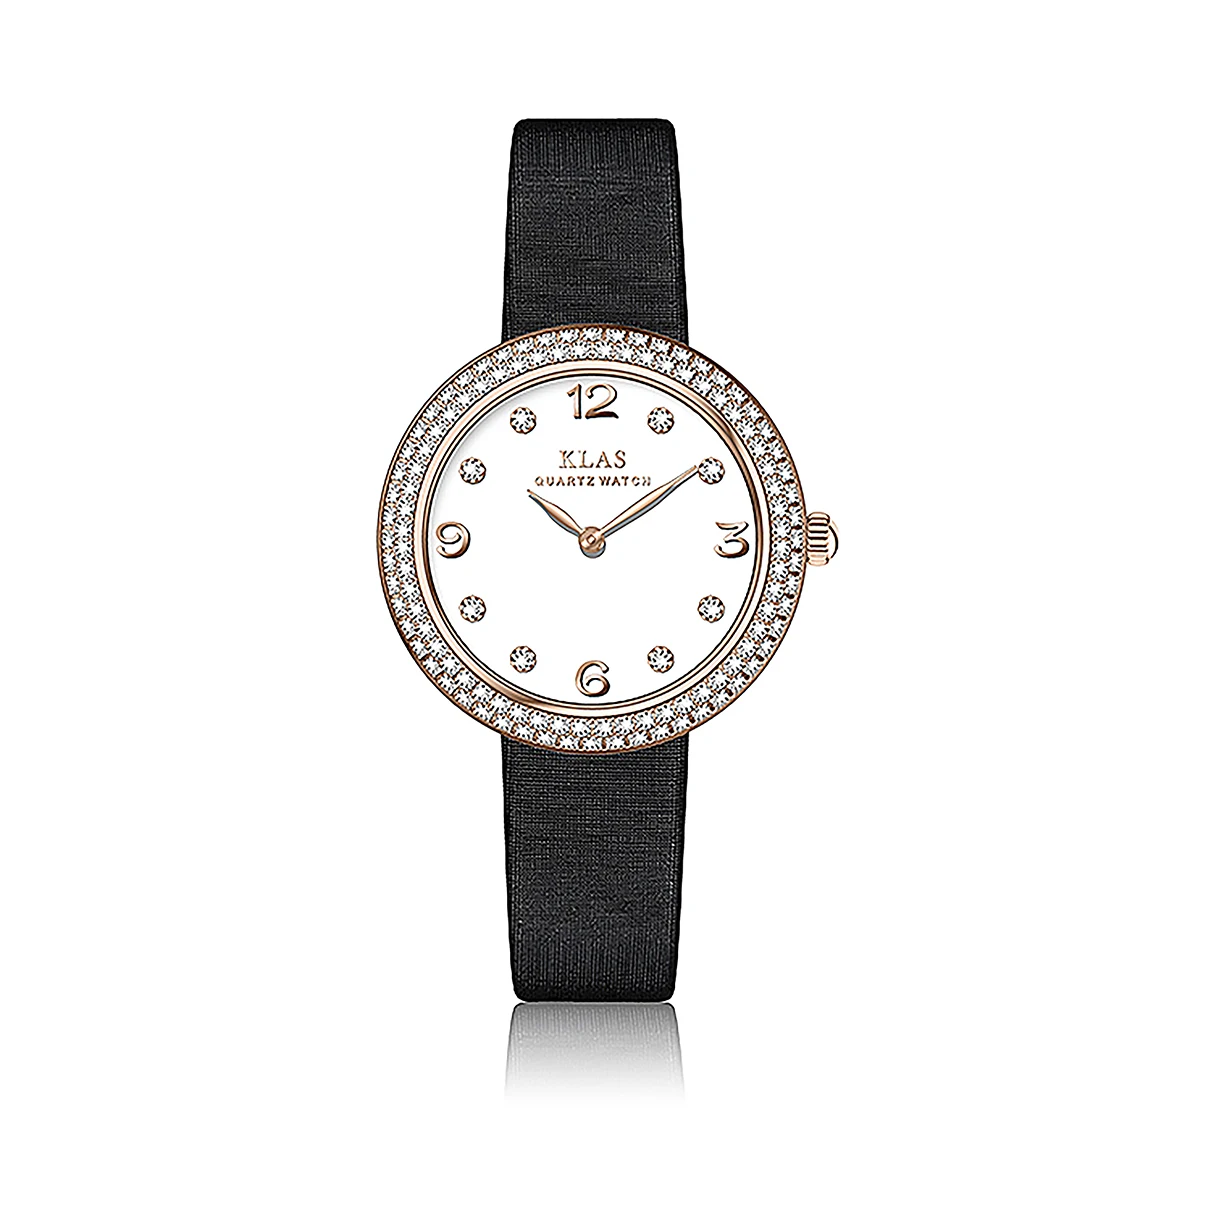 Women's Retro Women's Watch Leather Belt Quartz Watch women's casual adornment watch KLAS Brand enlarge